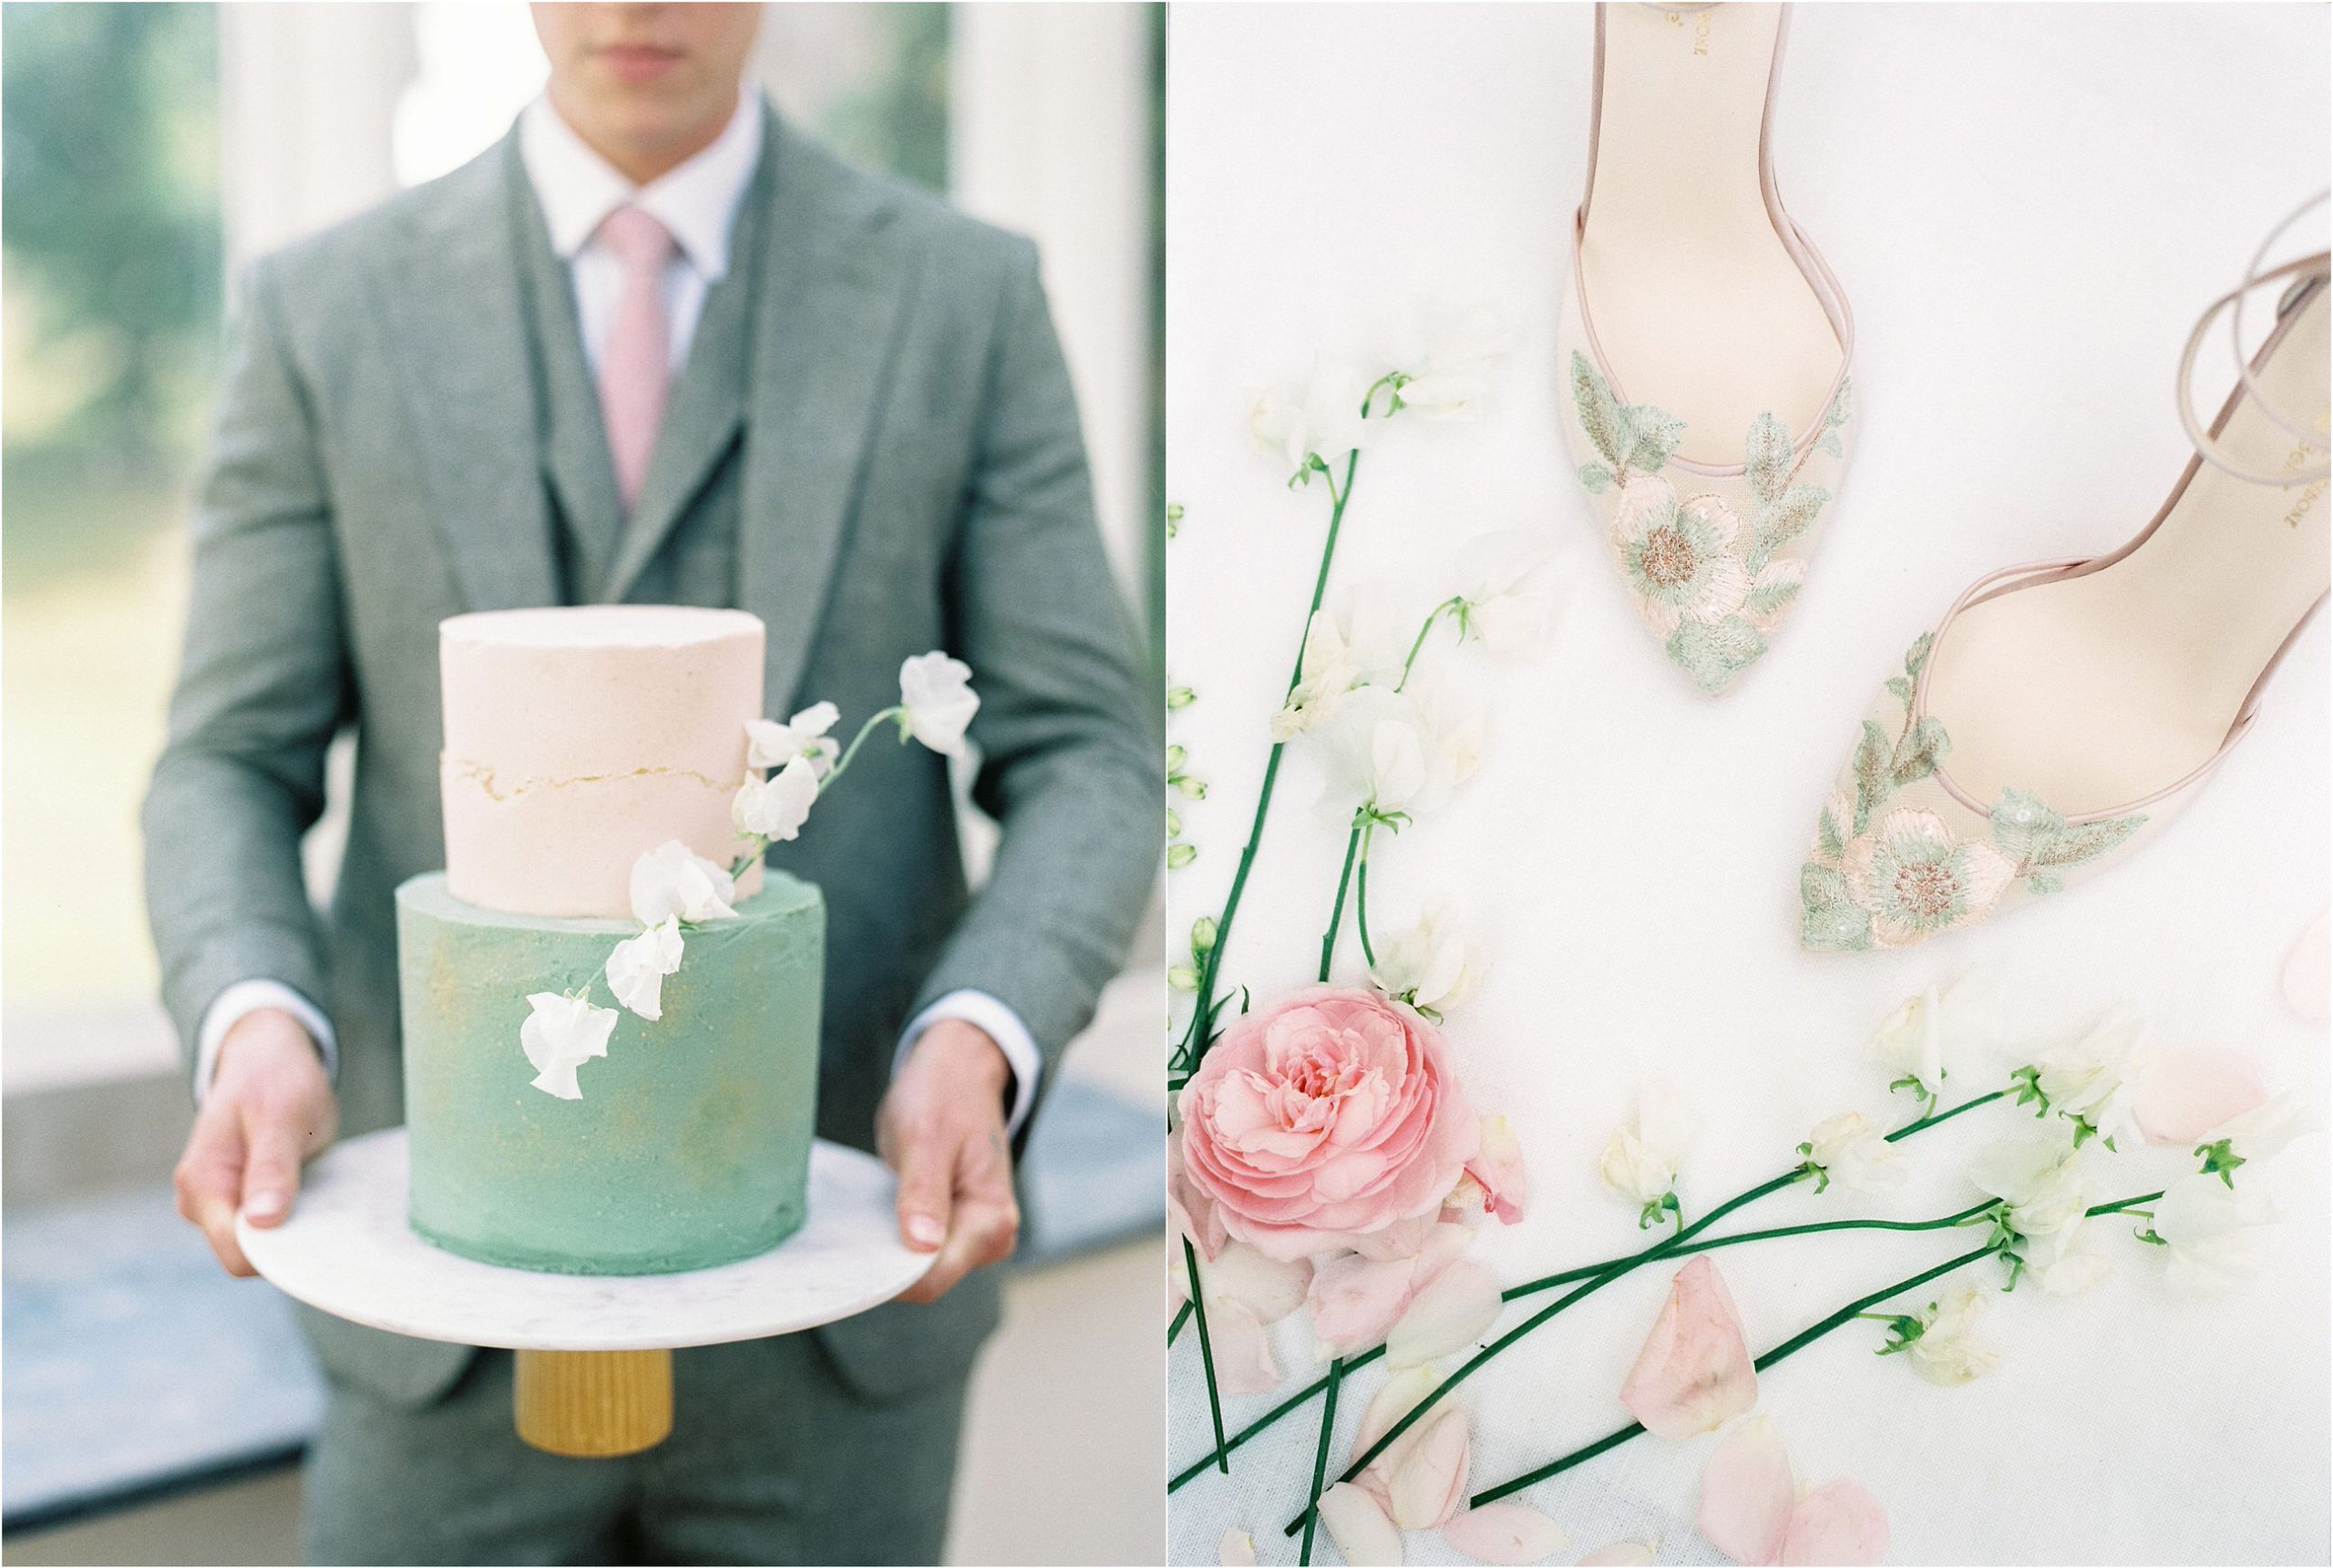 wedding cake and wedding shoes